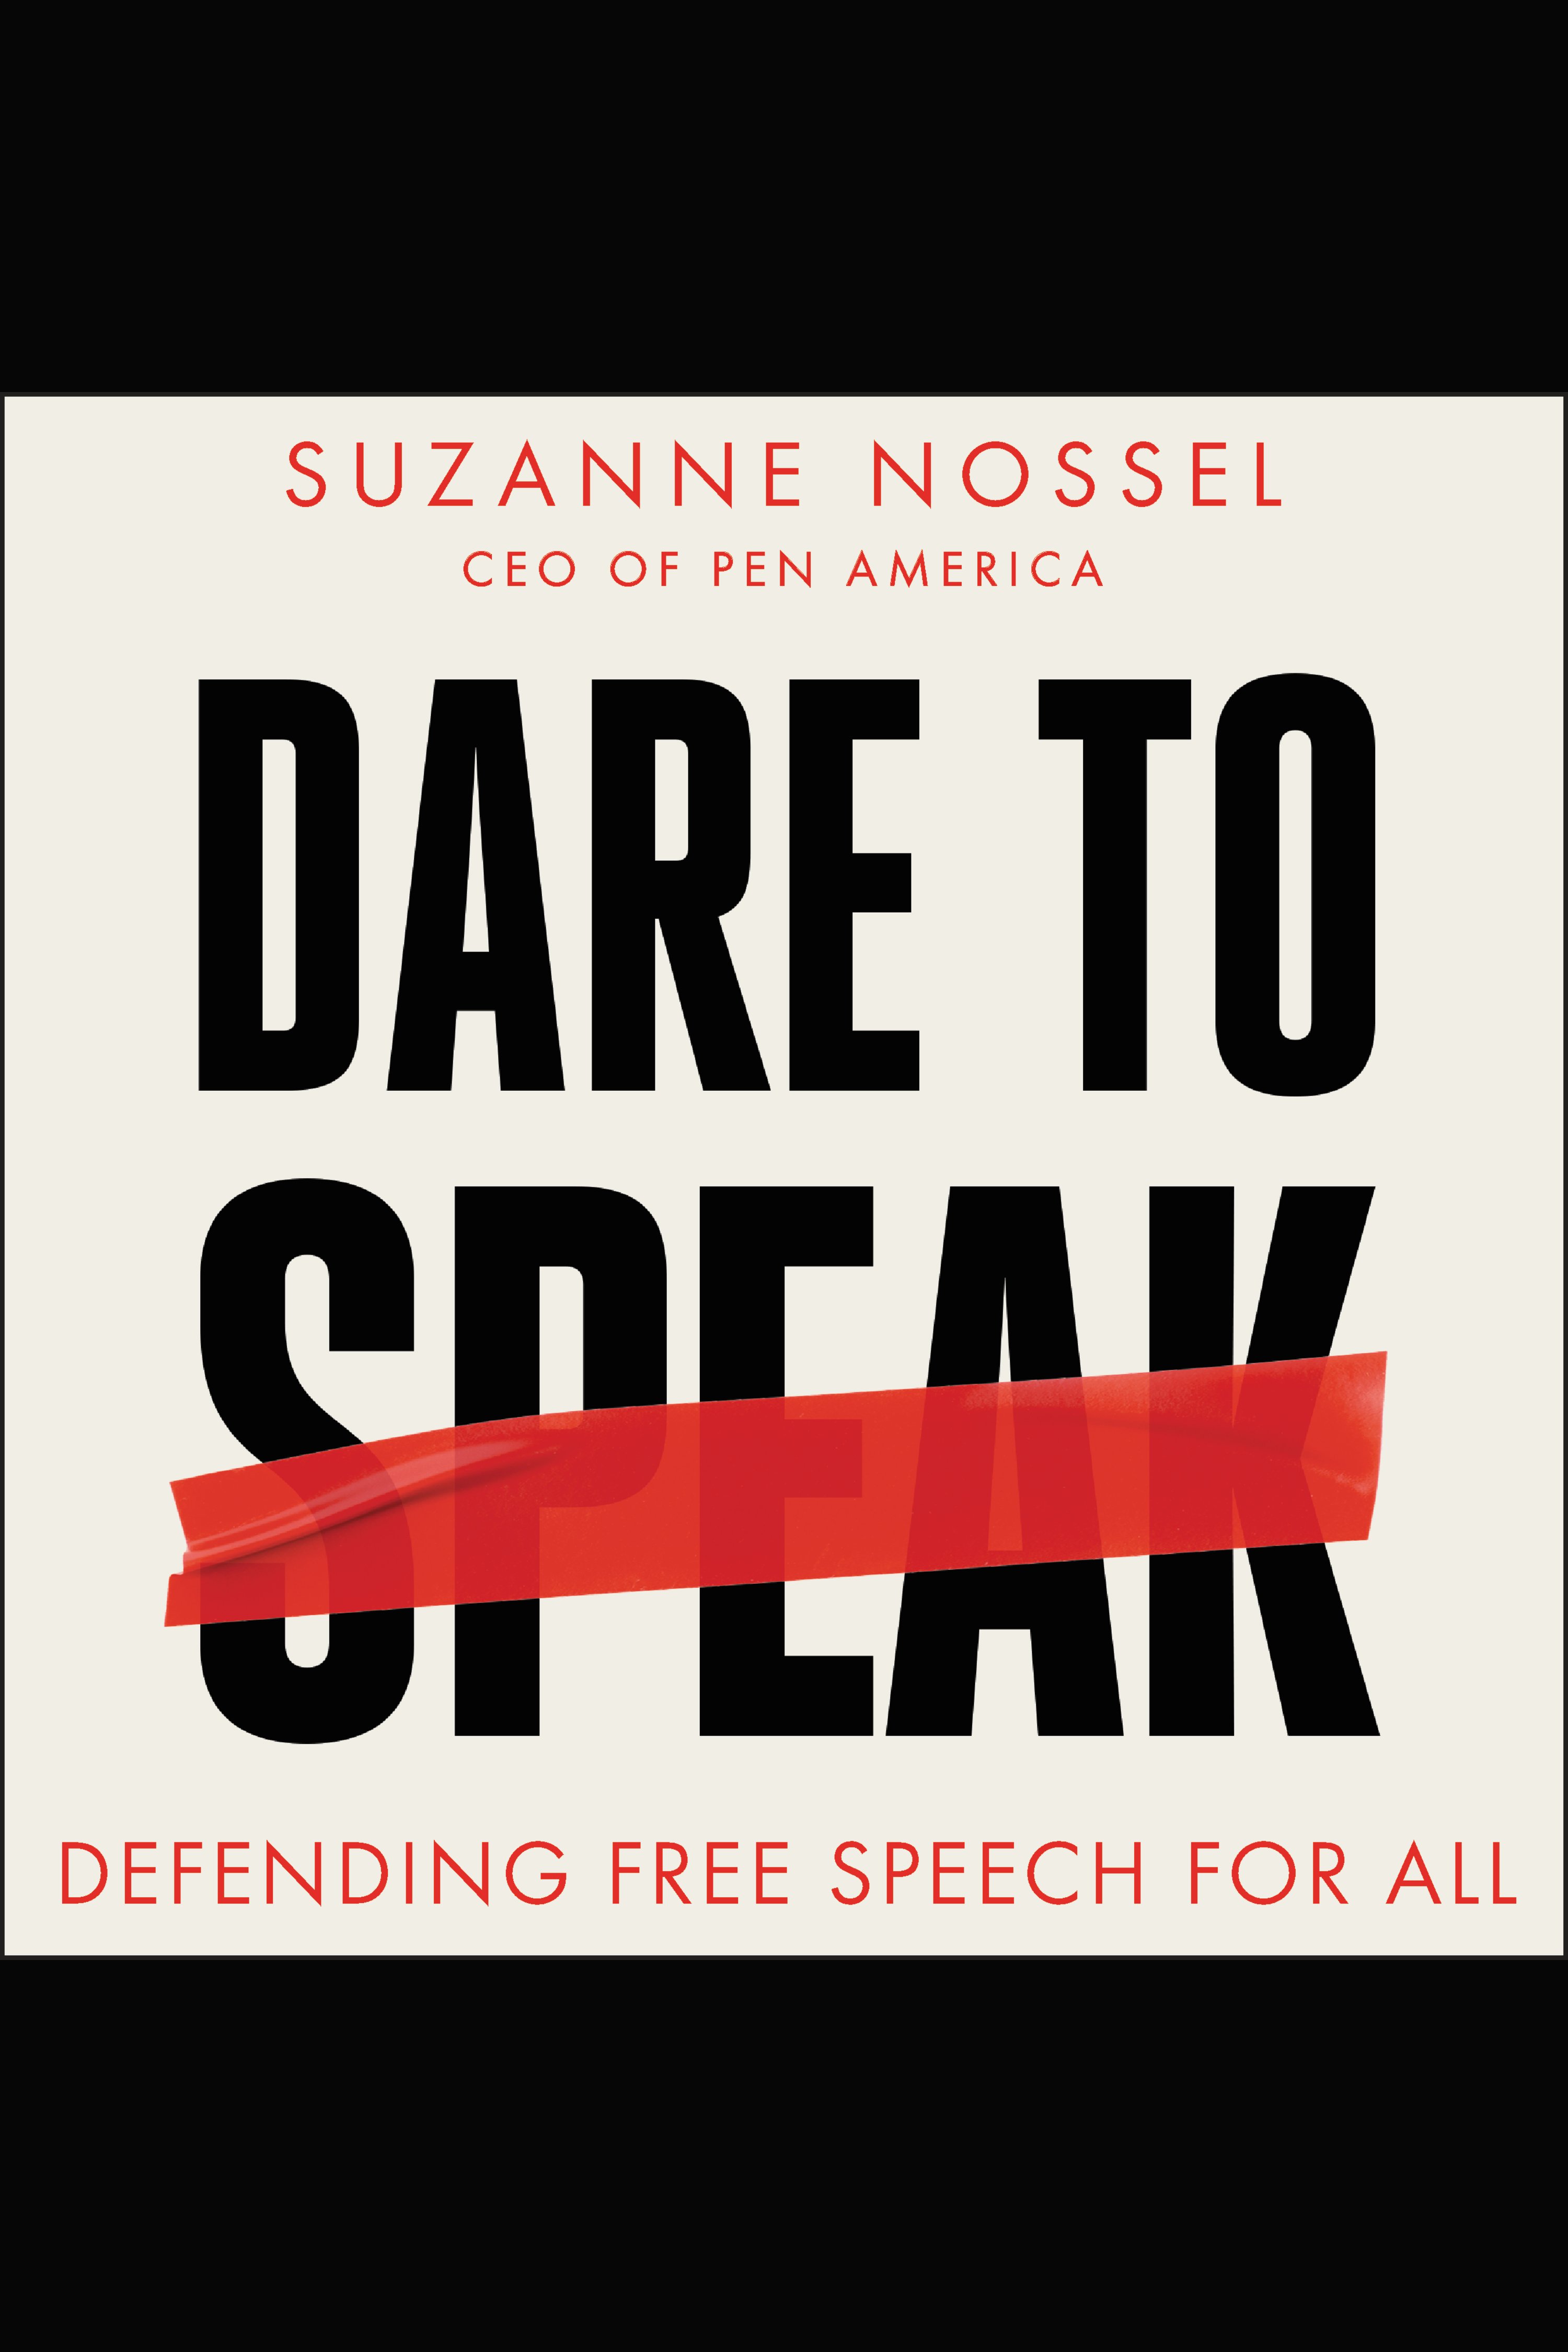 Dare to speak defending free speech for all cover image